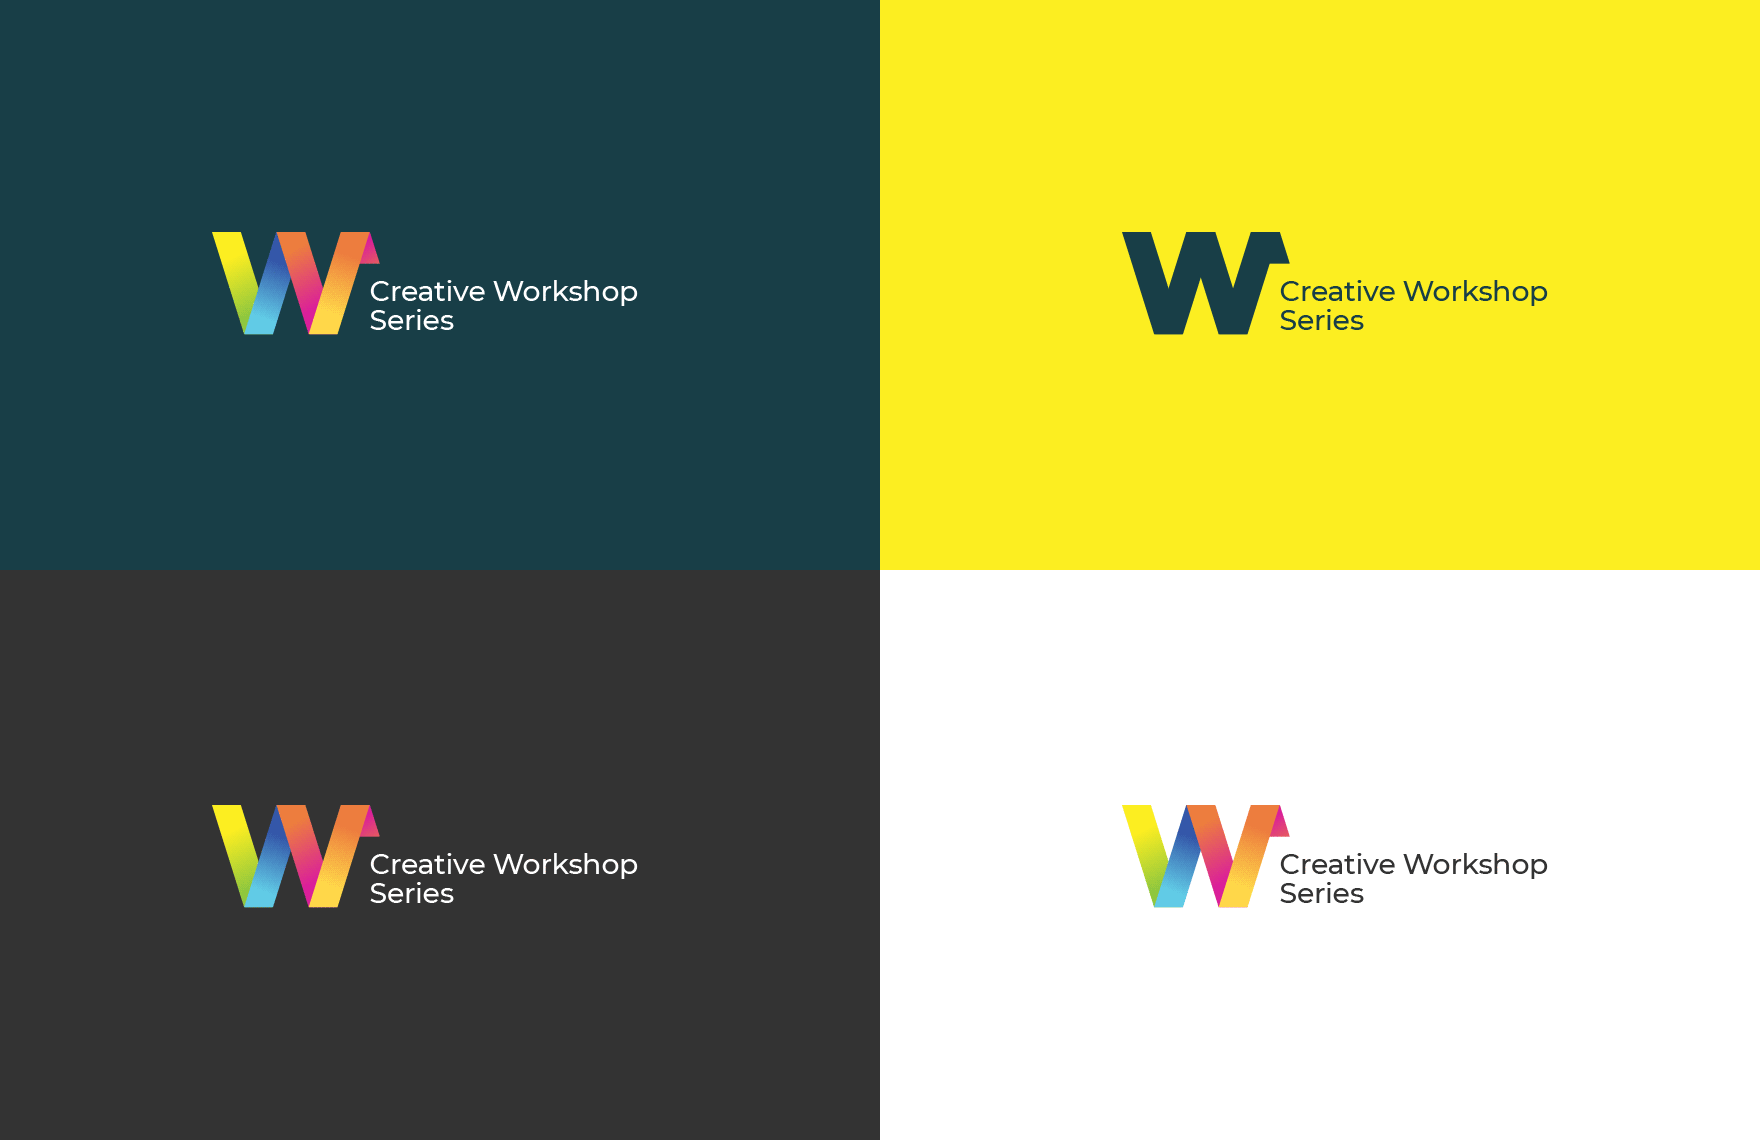 Creative Workshop Series Logo Template